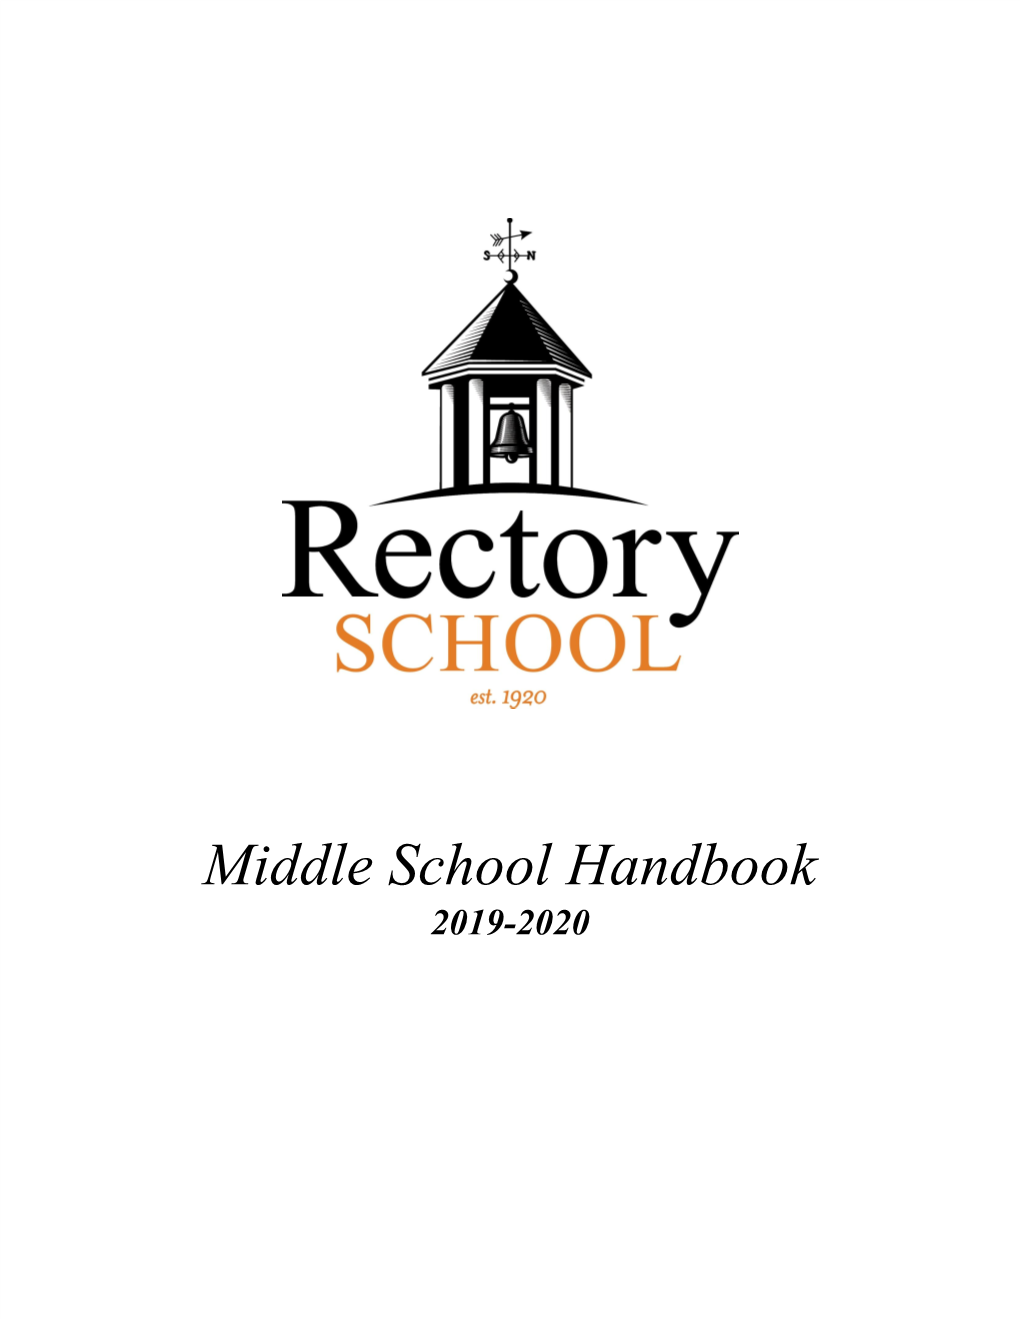 Middle School Handbook 2019-2020